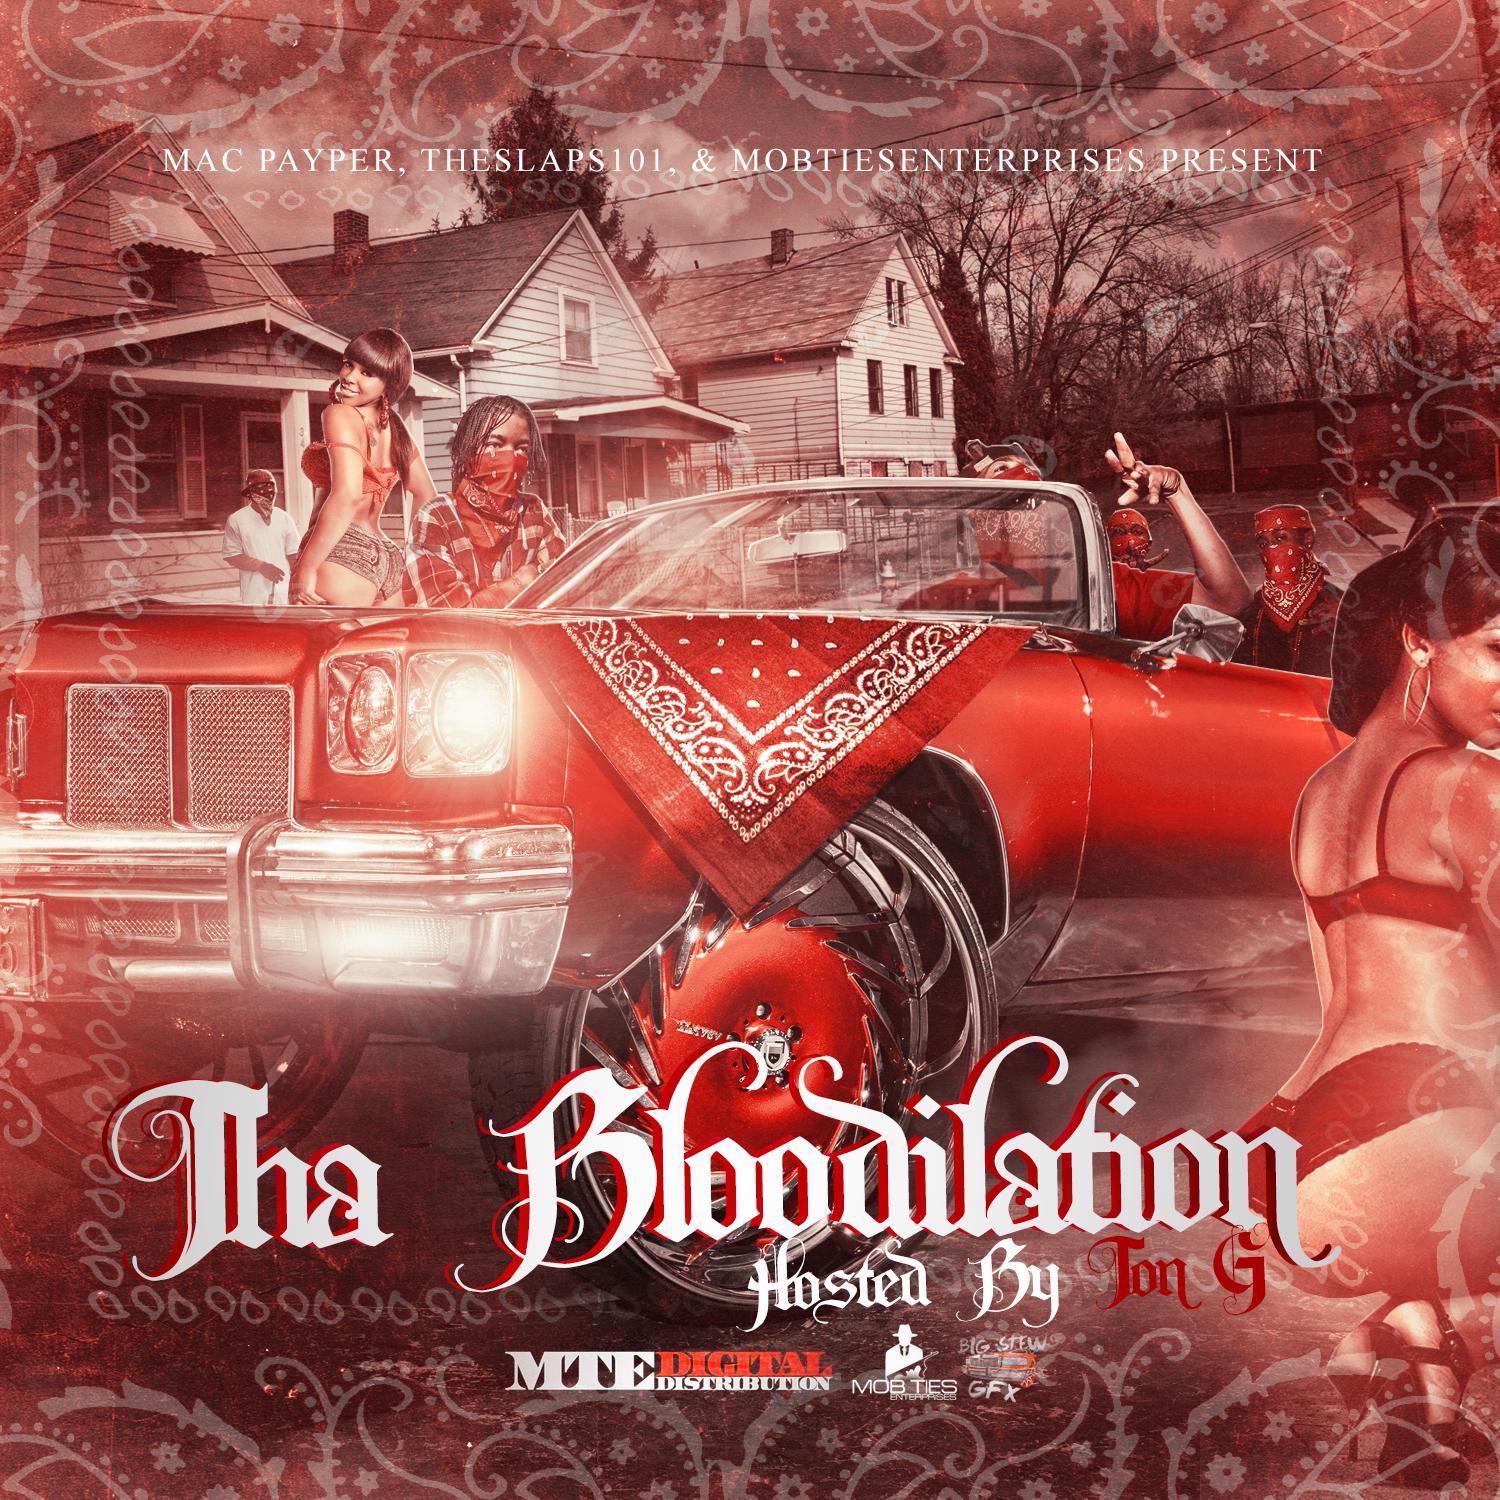 MobTies Enterprises Presents Tha Bloodilation (Vol. 1)